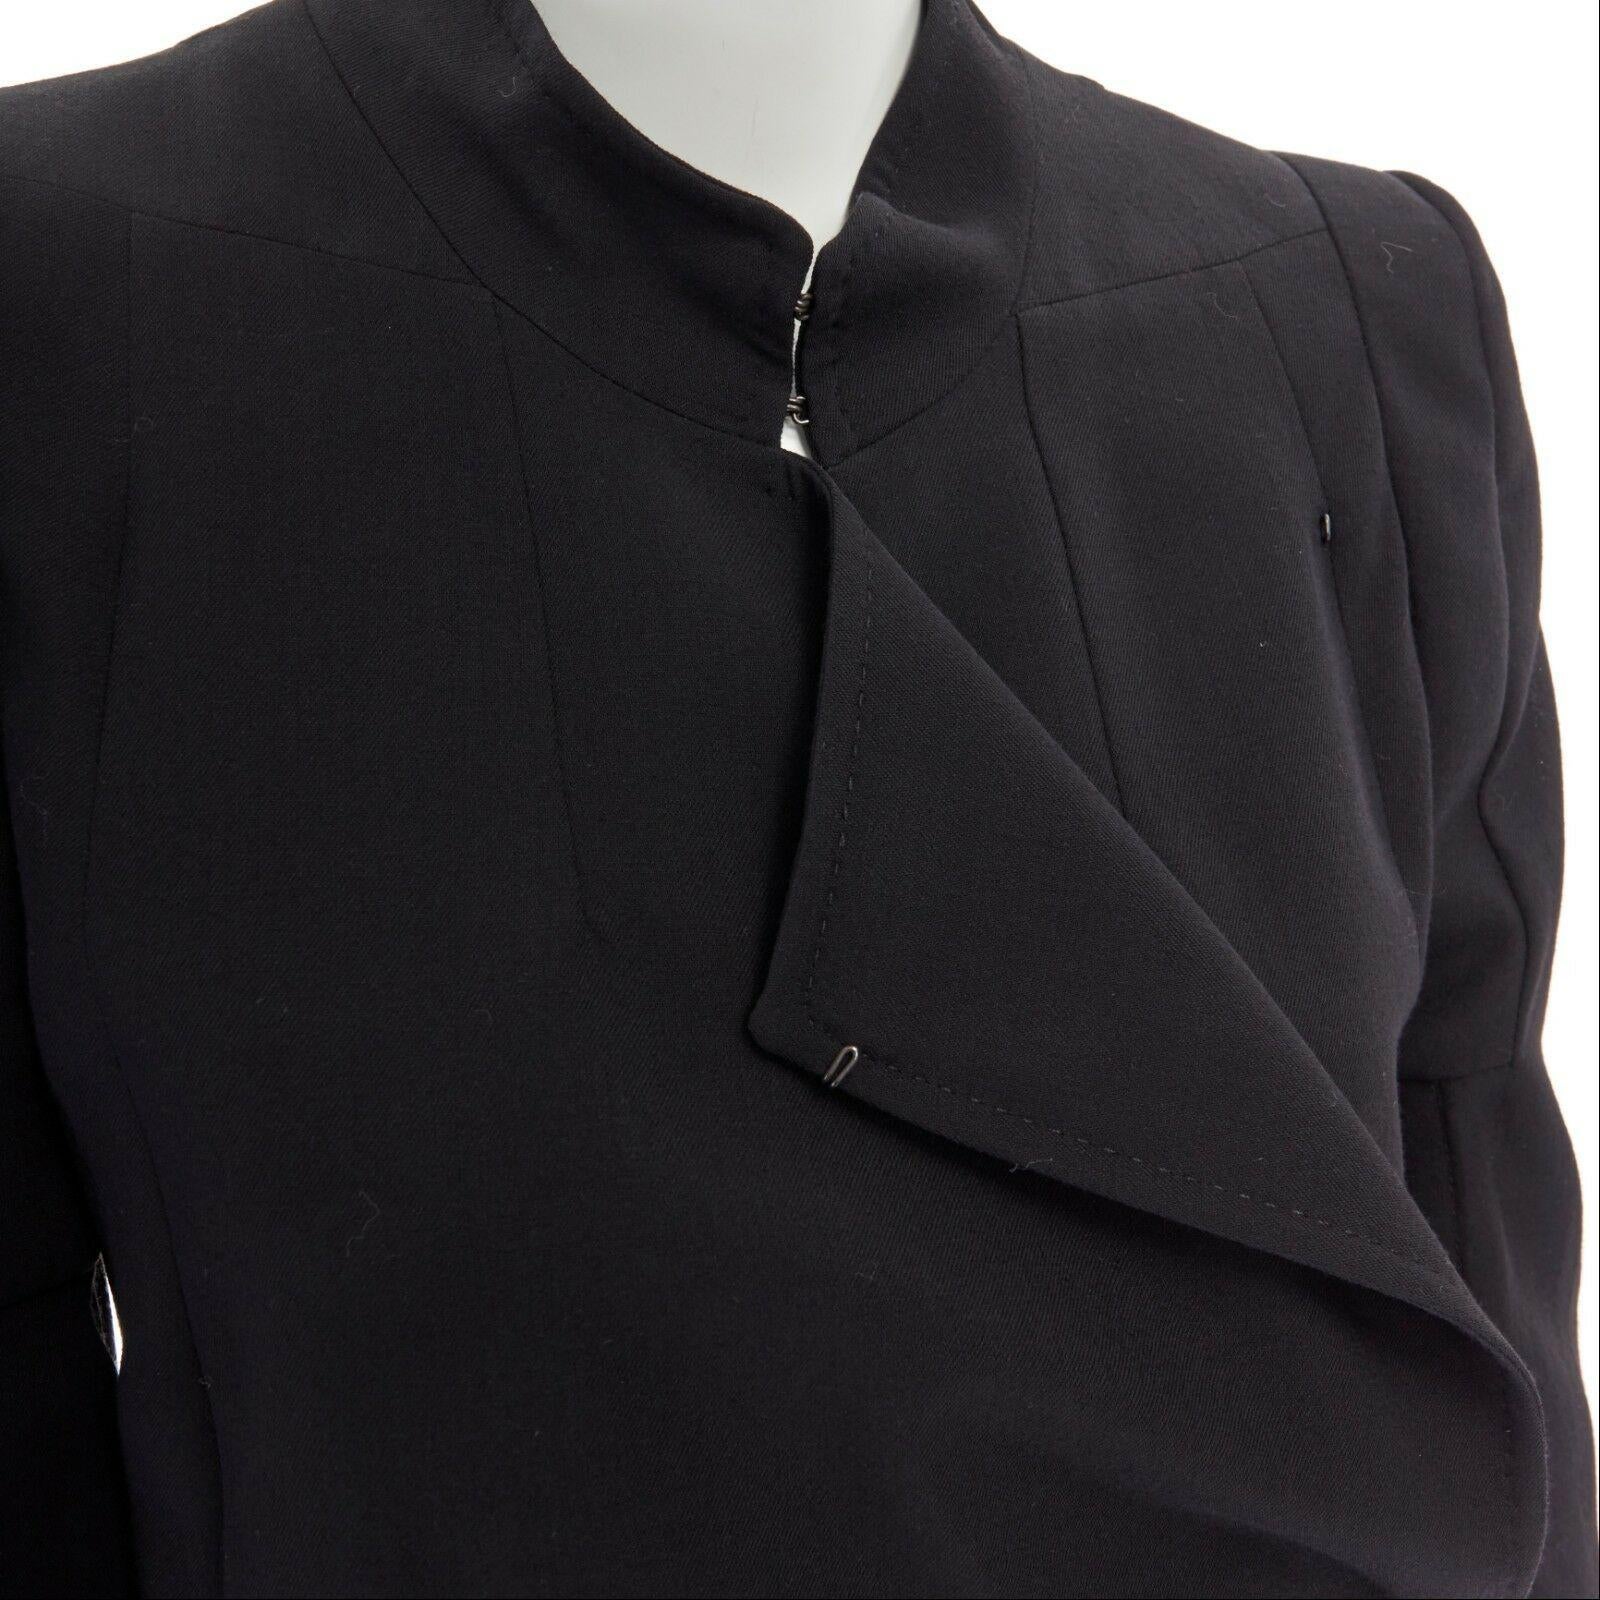 ANN DEMEULEMEESTER black draped front classic wool blazer jacket FR36 US2 UK8 S

ANN DEMEULEMEESTER
VIRGIN WOOL, RAYON, POLYESTER, VISCOSE . BLACK . MULTI-WAY TO WEAR WITH VARIOUS HOOK EYE CLOSURE . DRAPED FRONT . HOOK EYE CLOSURE AT COLLAR . PADDED